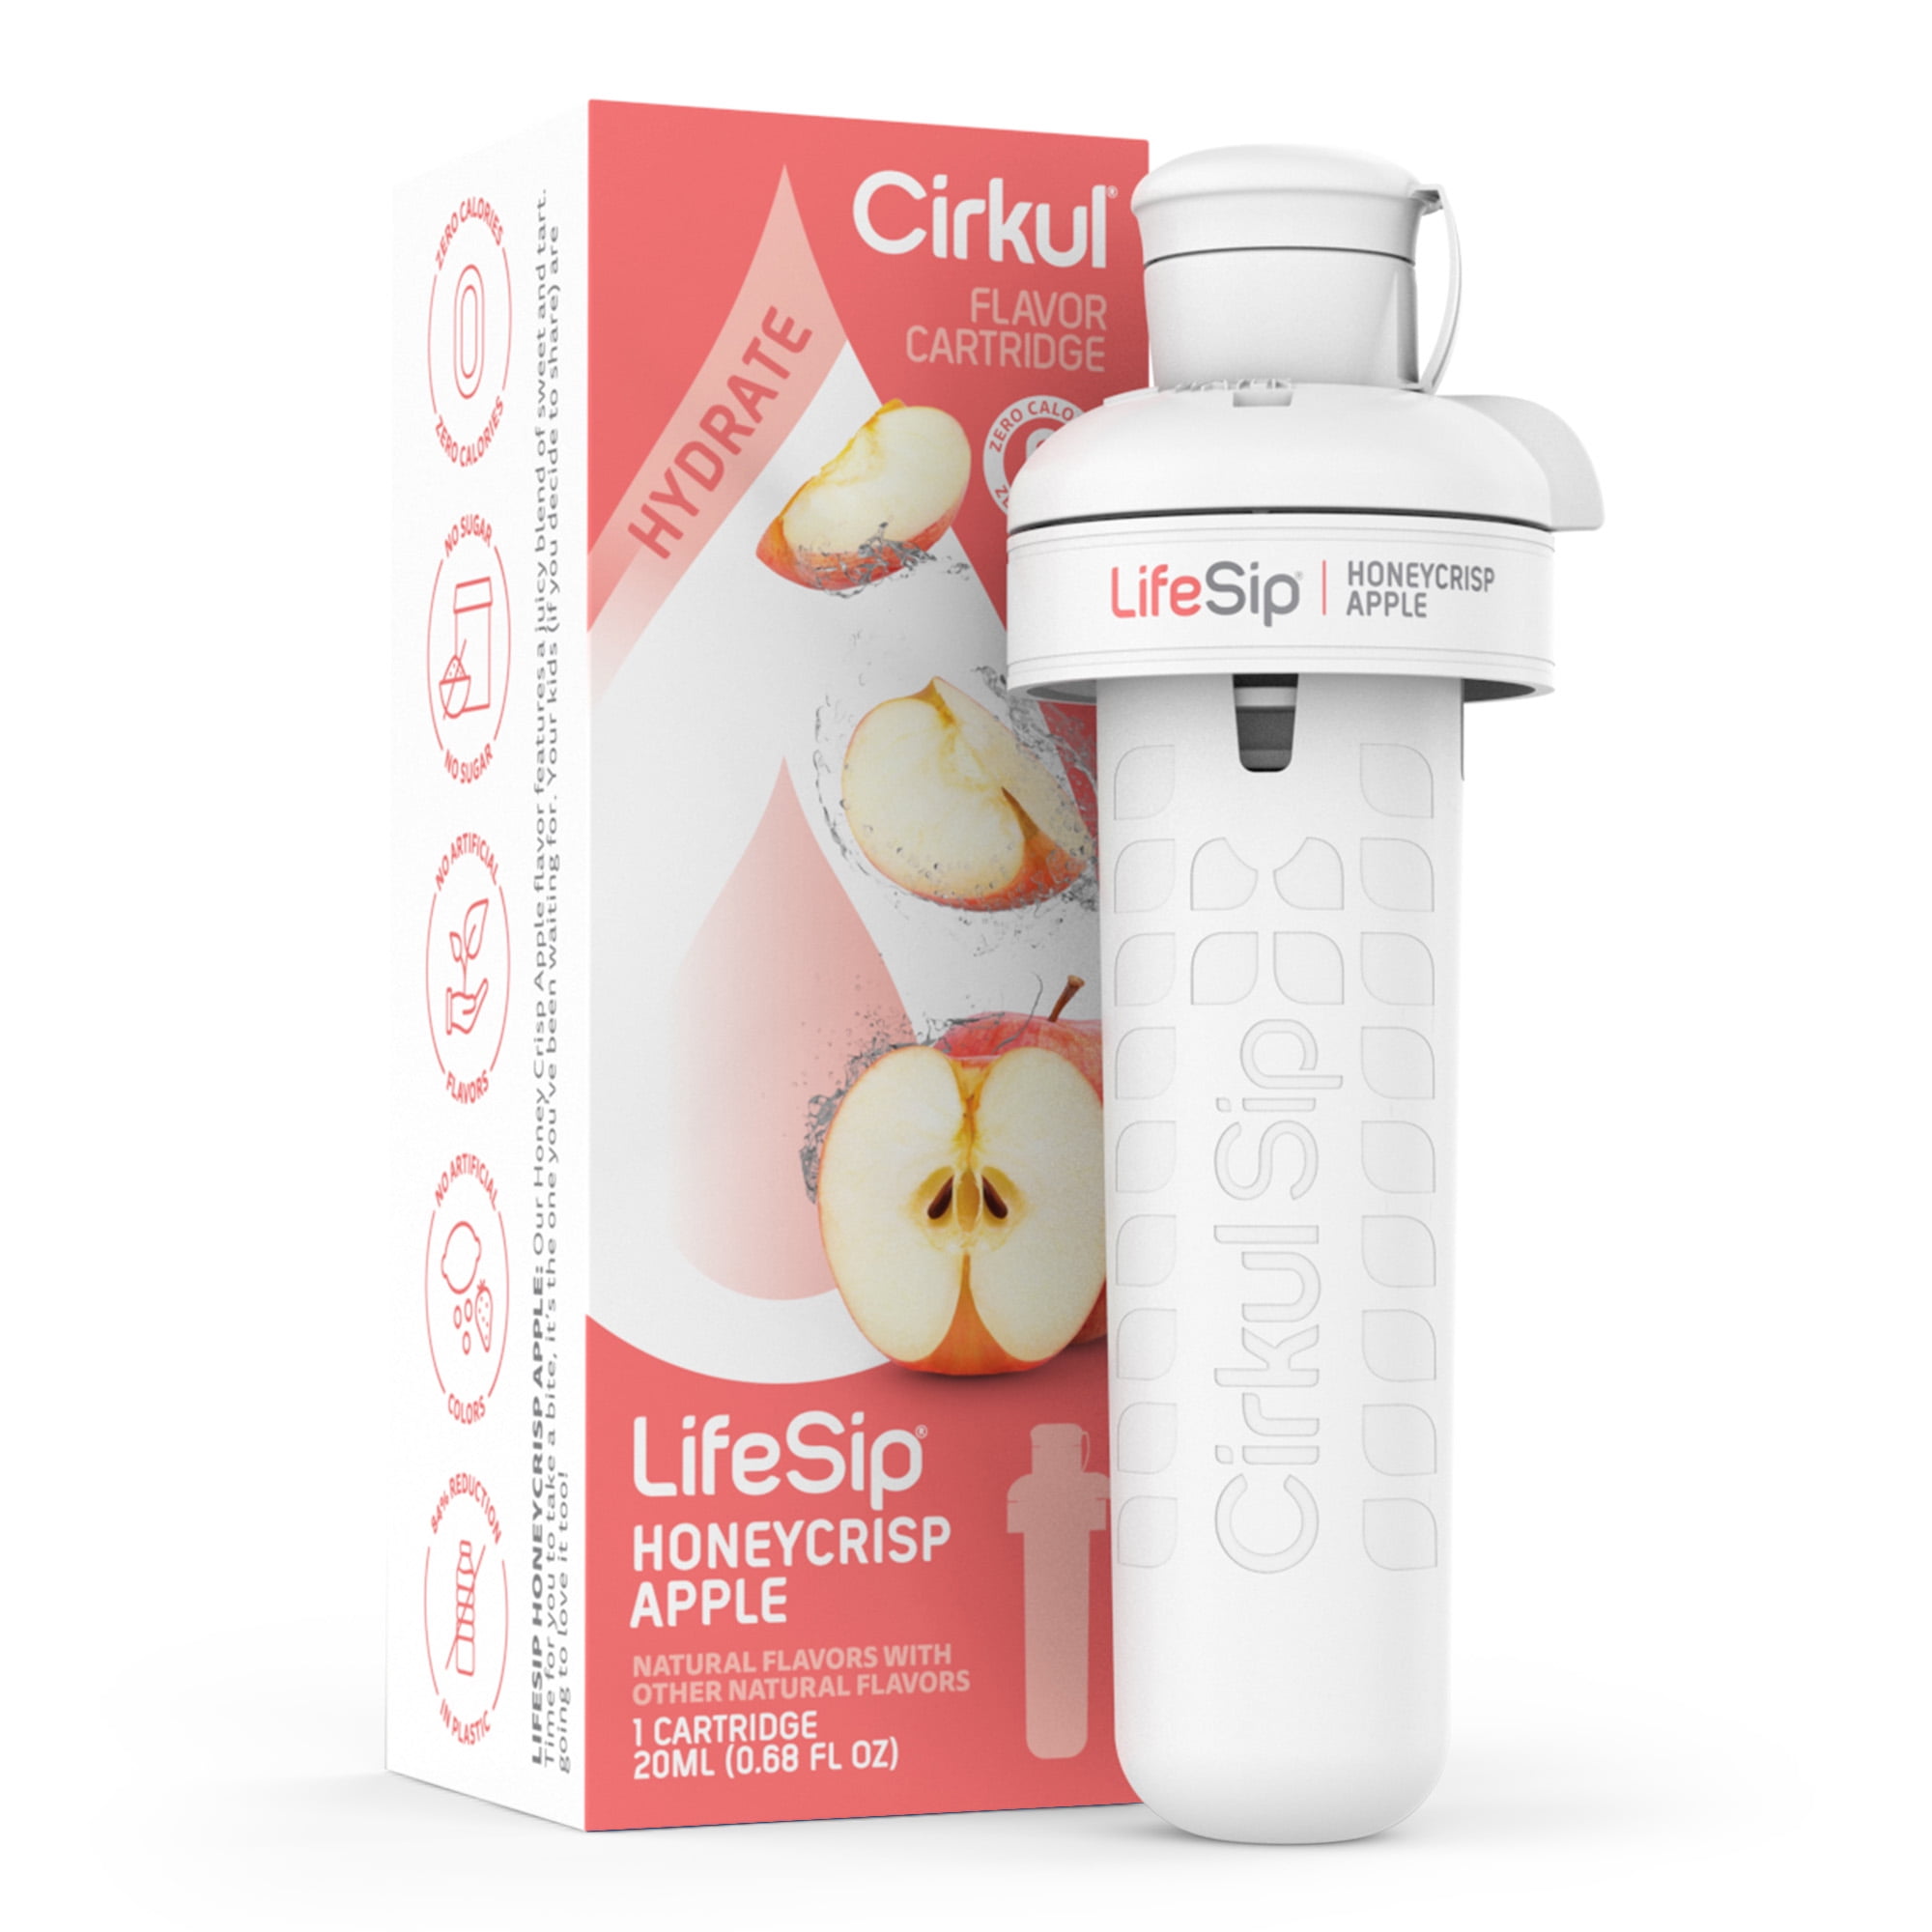 Cirkul LifeSip Honeycrisp Apple Flavor Cartridge, Drink Mix, 1-Pack 